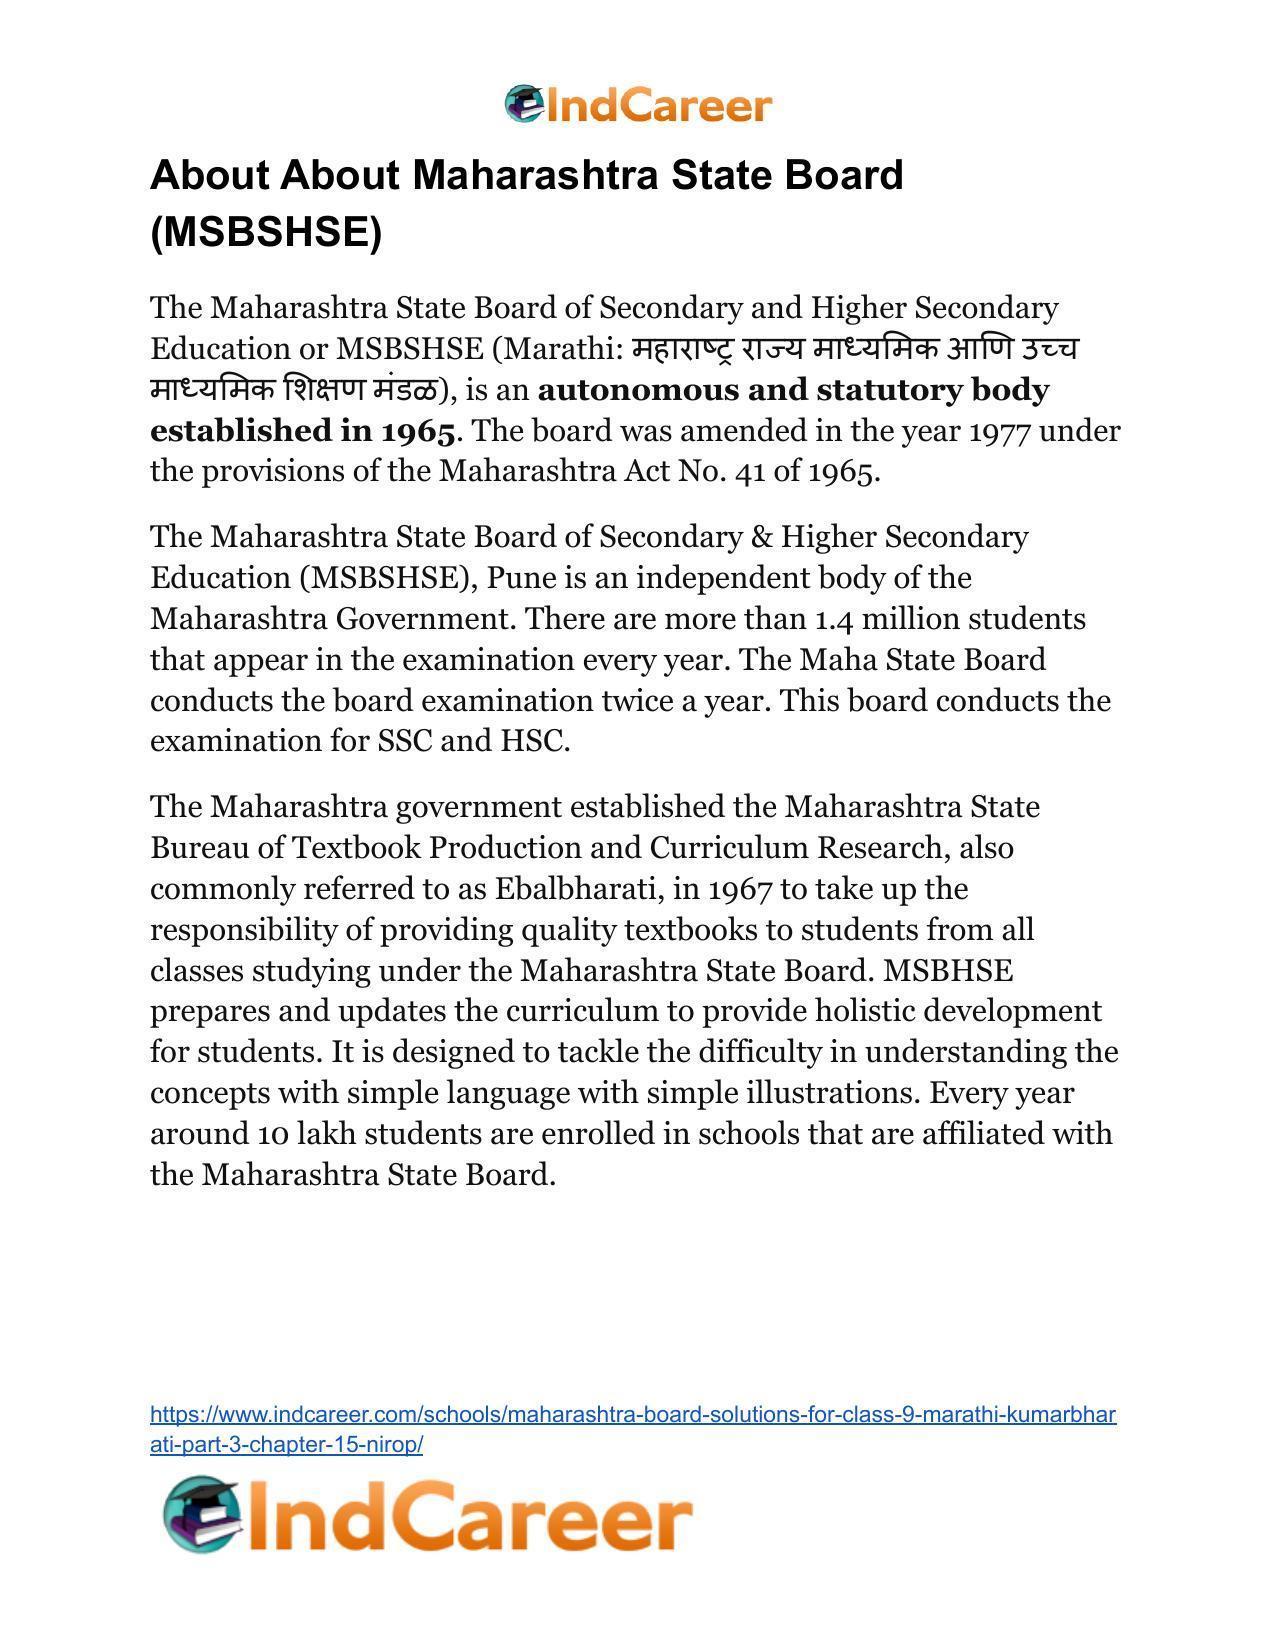 Maharashtra Board Solutions for Class 9- Marathi Kumarbharati (Part- 3): Chapter 15- निरोप - Page 17